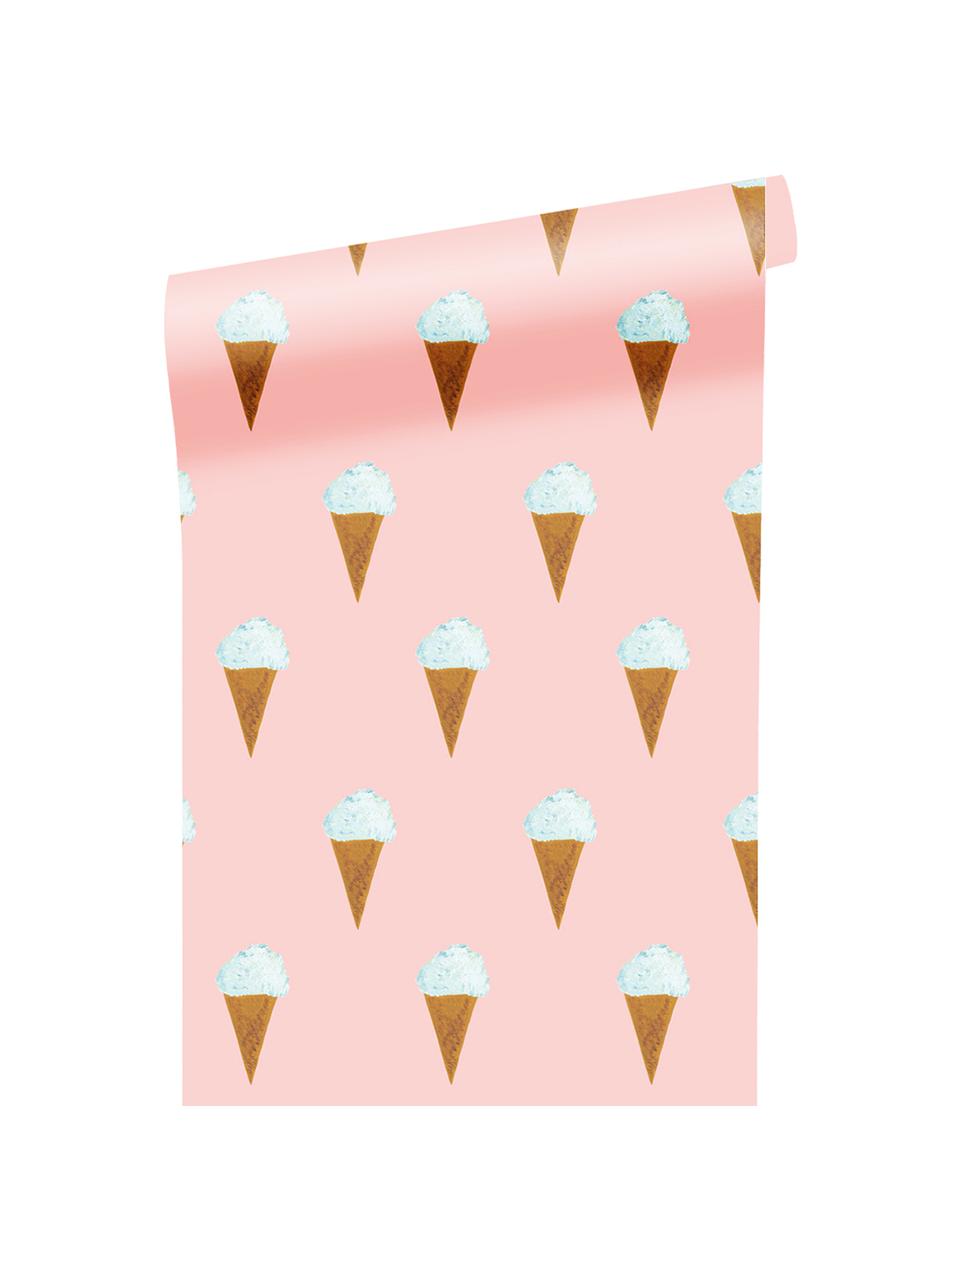 Tapeta Ice Cream, Matný papír, 165 g/m², Růžová, bílá, hnědá, Š 97cm, V 280 cm